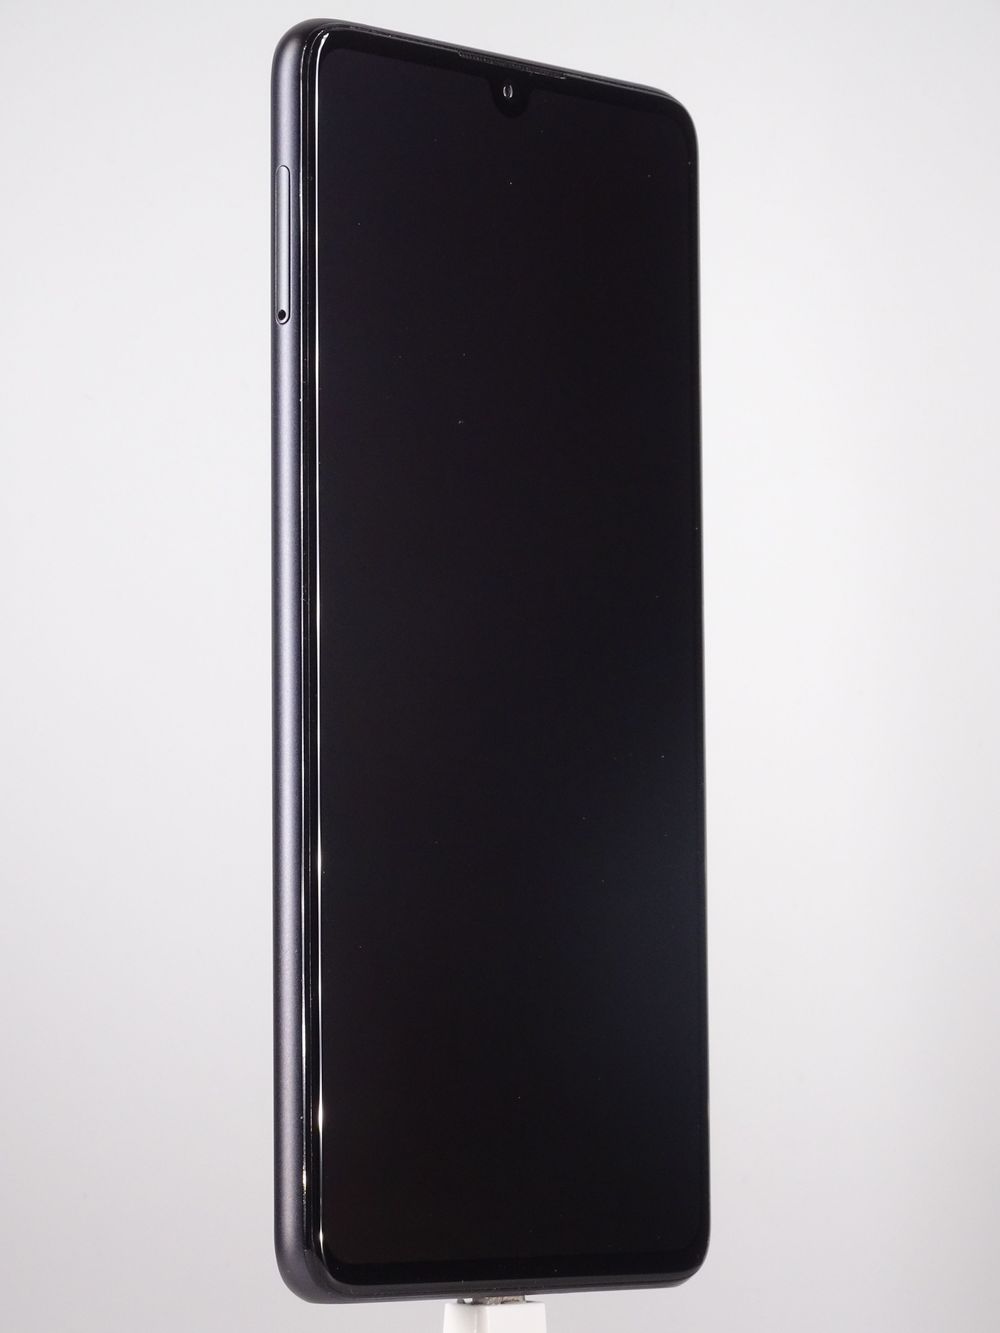 Mobiltelefon Huawei P30 Dual Sim, Black, 256 GB, Foarte Bun